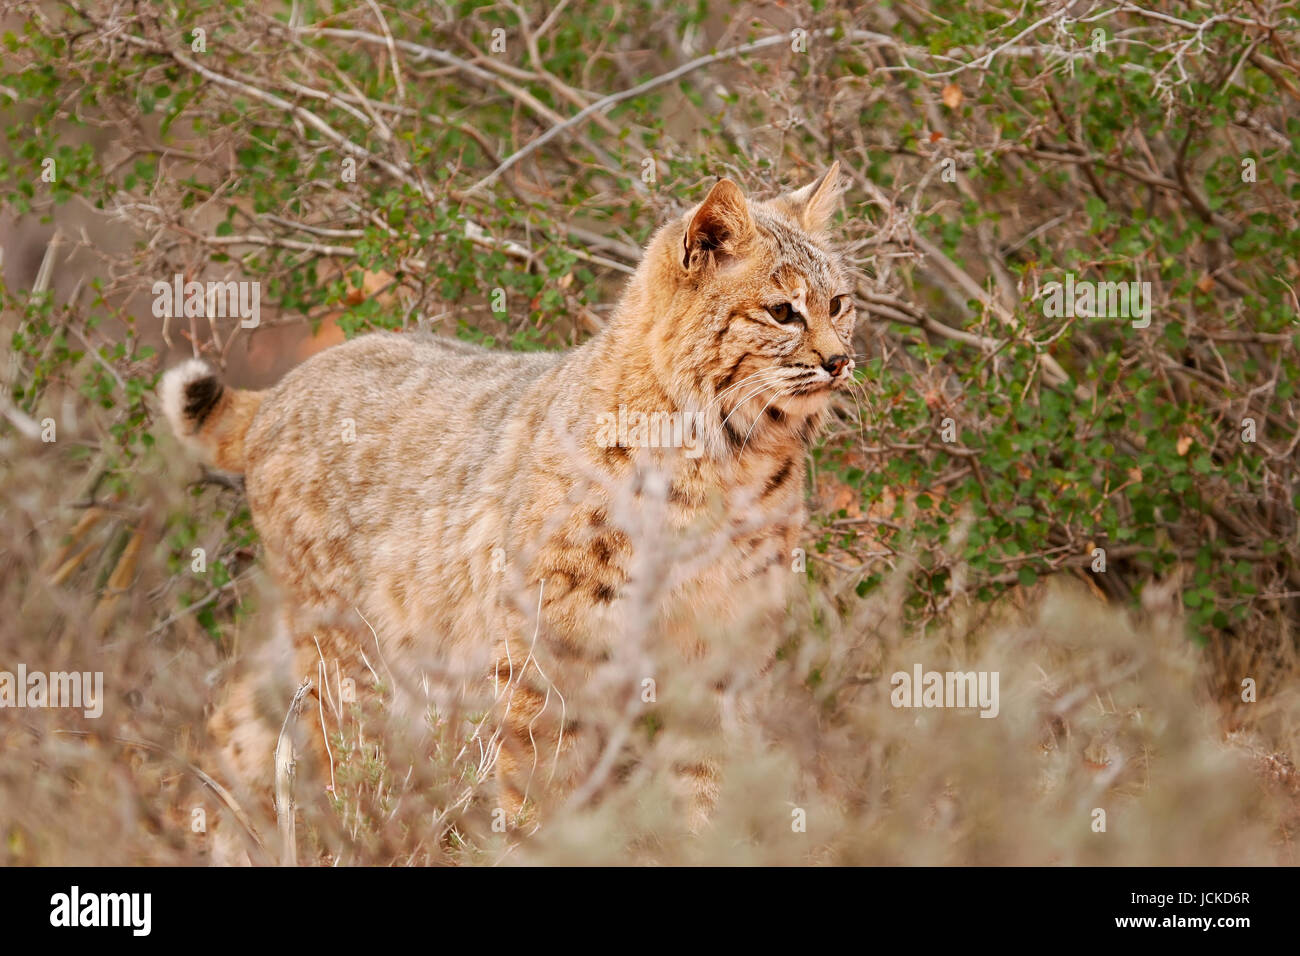 Bobcat (Lynx rufus) standing near bushes Stock Photo